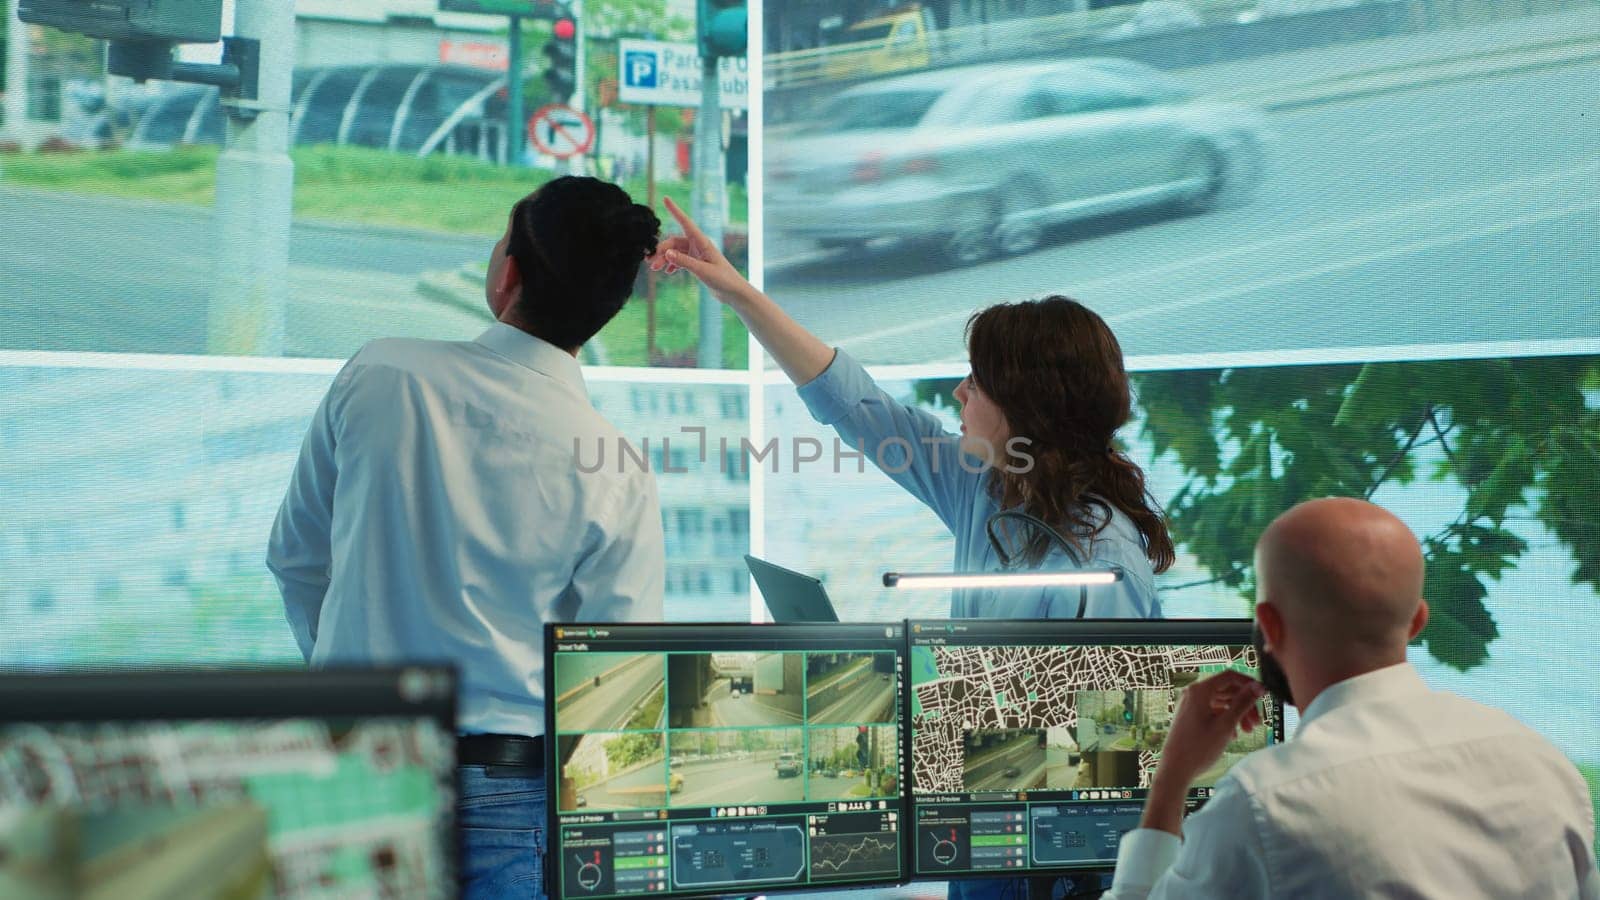 Diverse employees monitoring traffic via radar cameras at stop lights by DCStudio